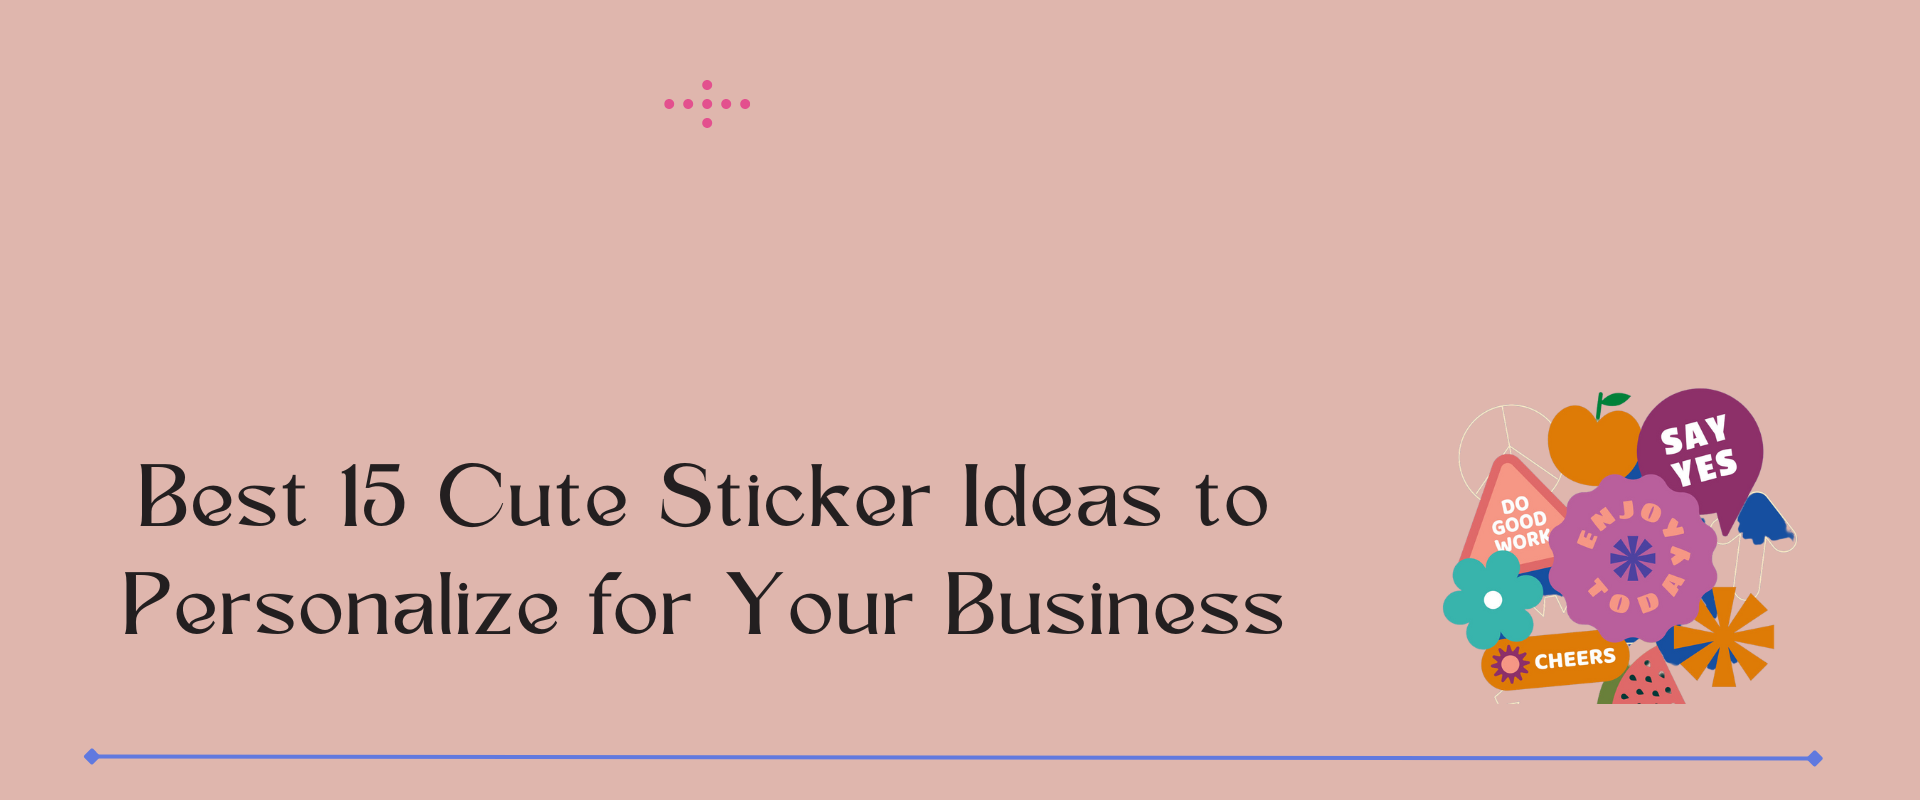 cute sticker ideas